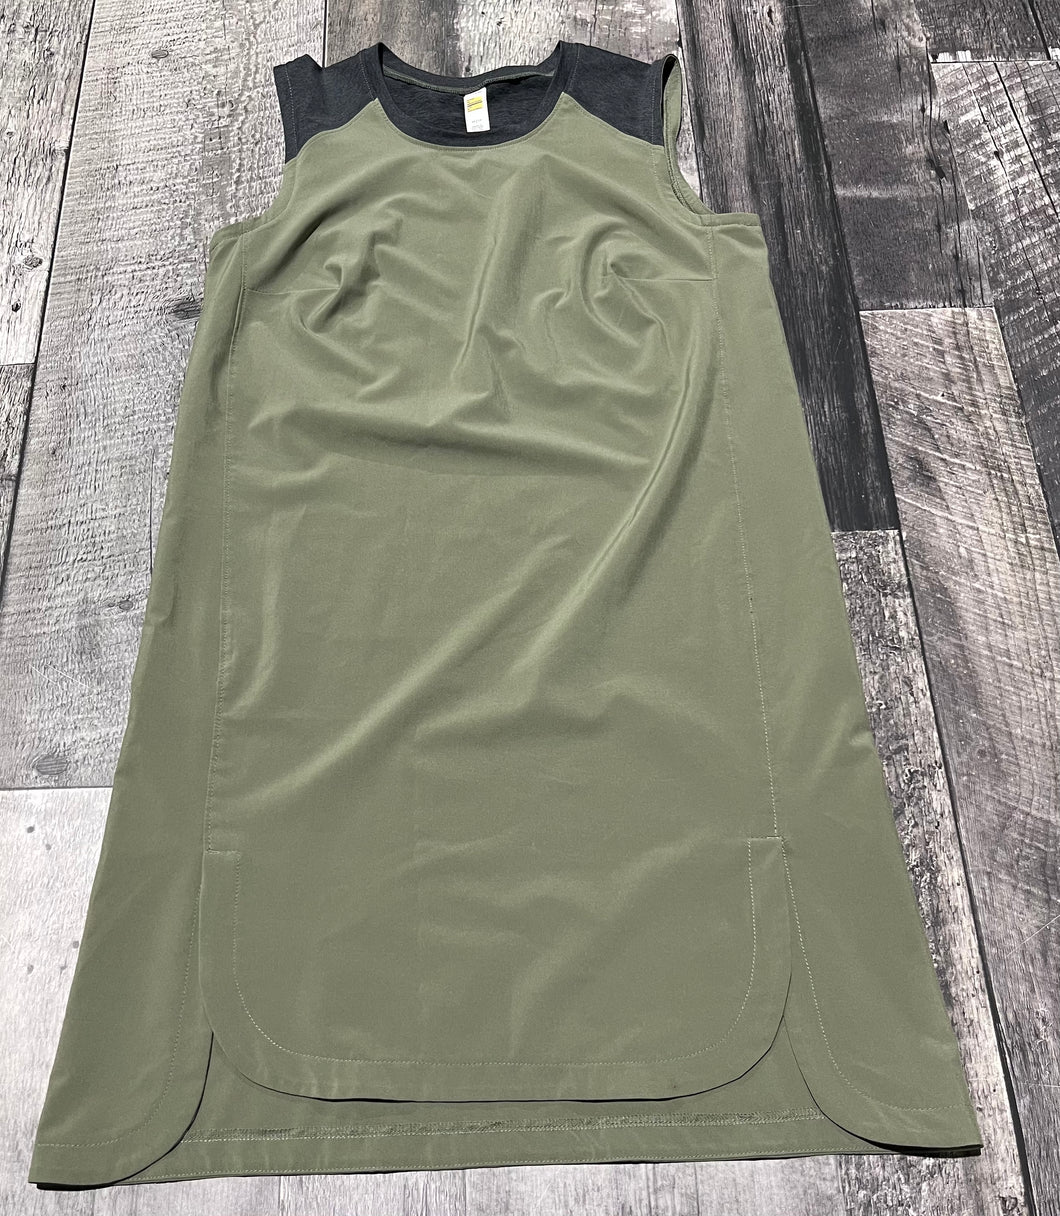 Lolë green/grey dress - Hers size XS